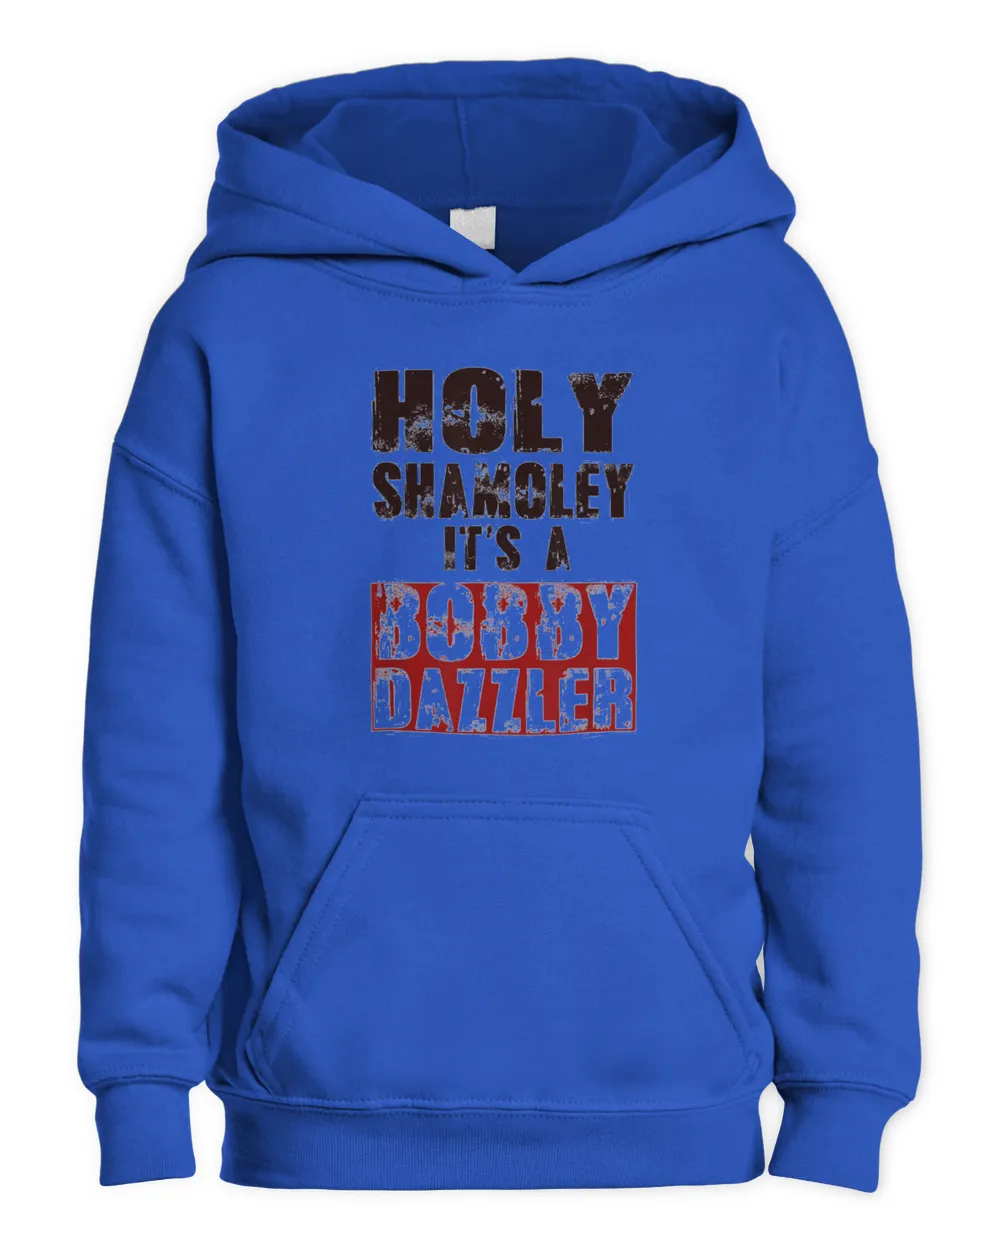 Curse of Oak Island Holy Shamoley Bobby Dazzler T-Shirt